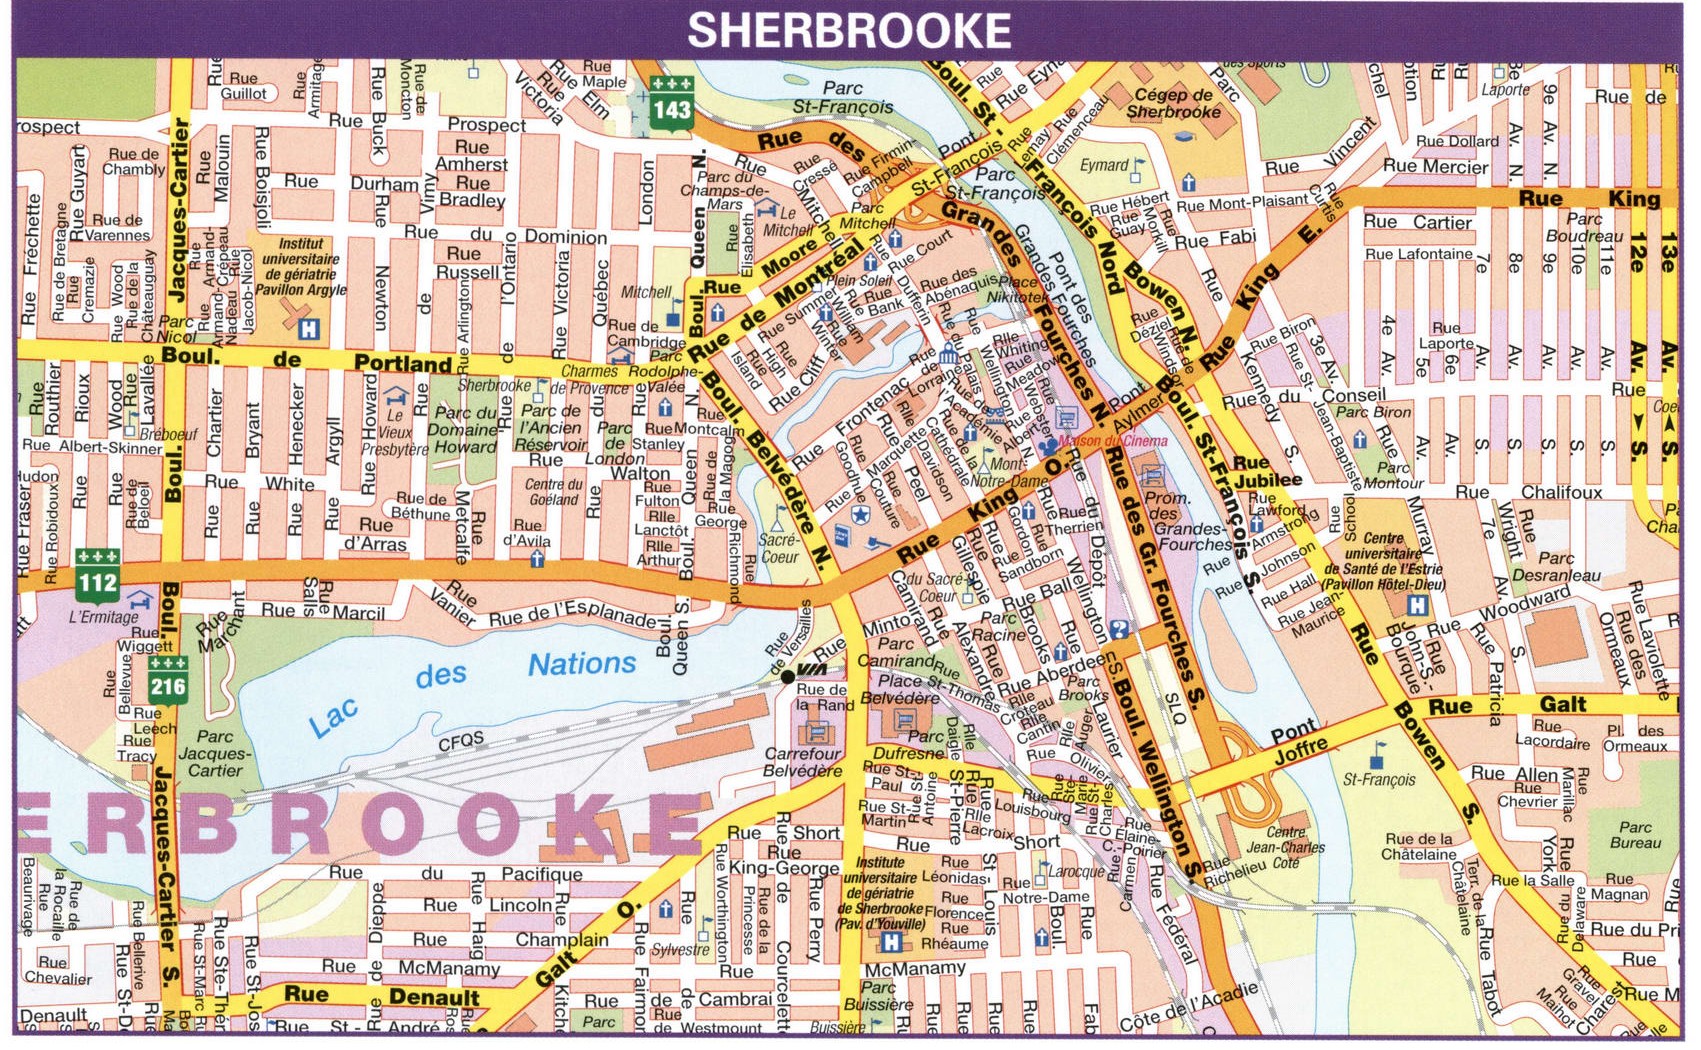 Sherbrooke road map